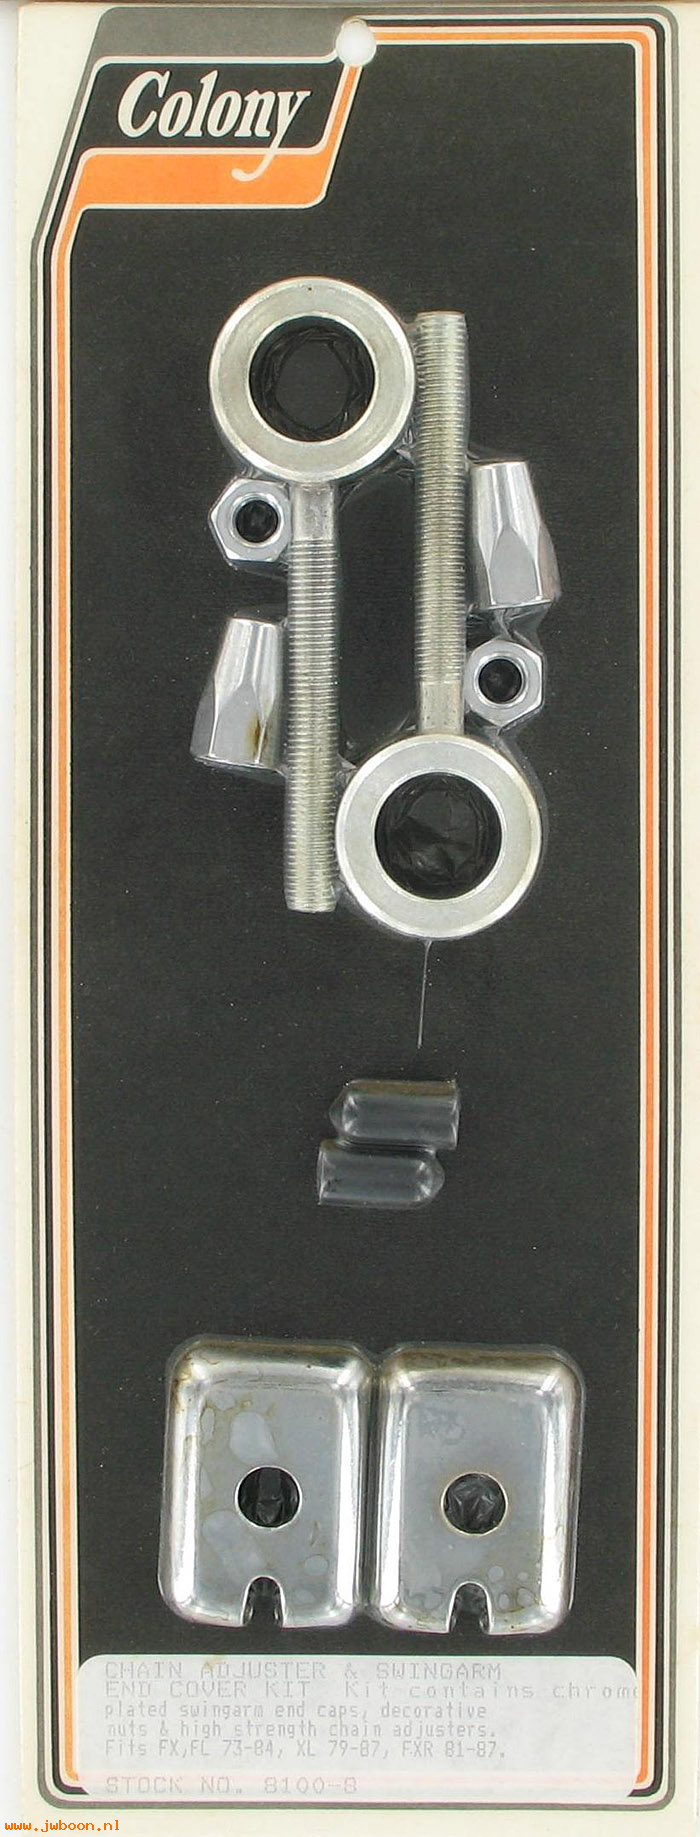 C 8100-8 (41570-77): Chain adjusters & swing arm cover kit - FL 73-e84. XL 79-95. FXR